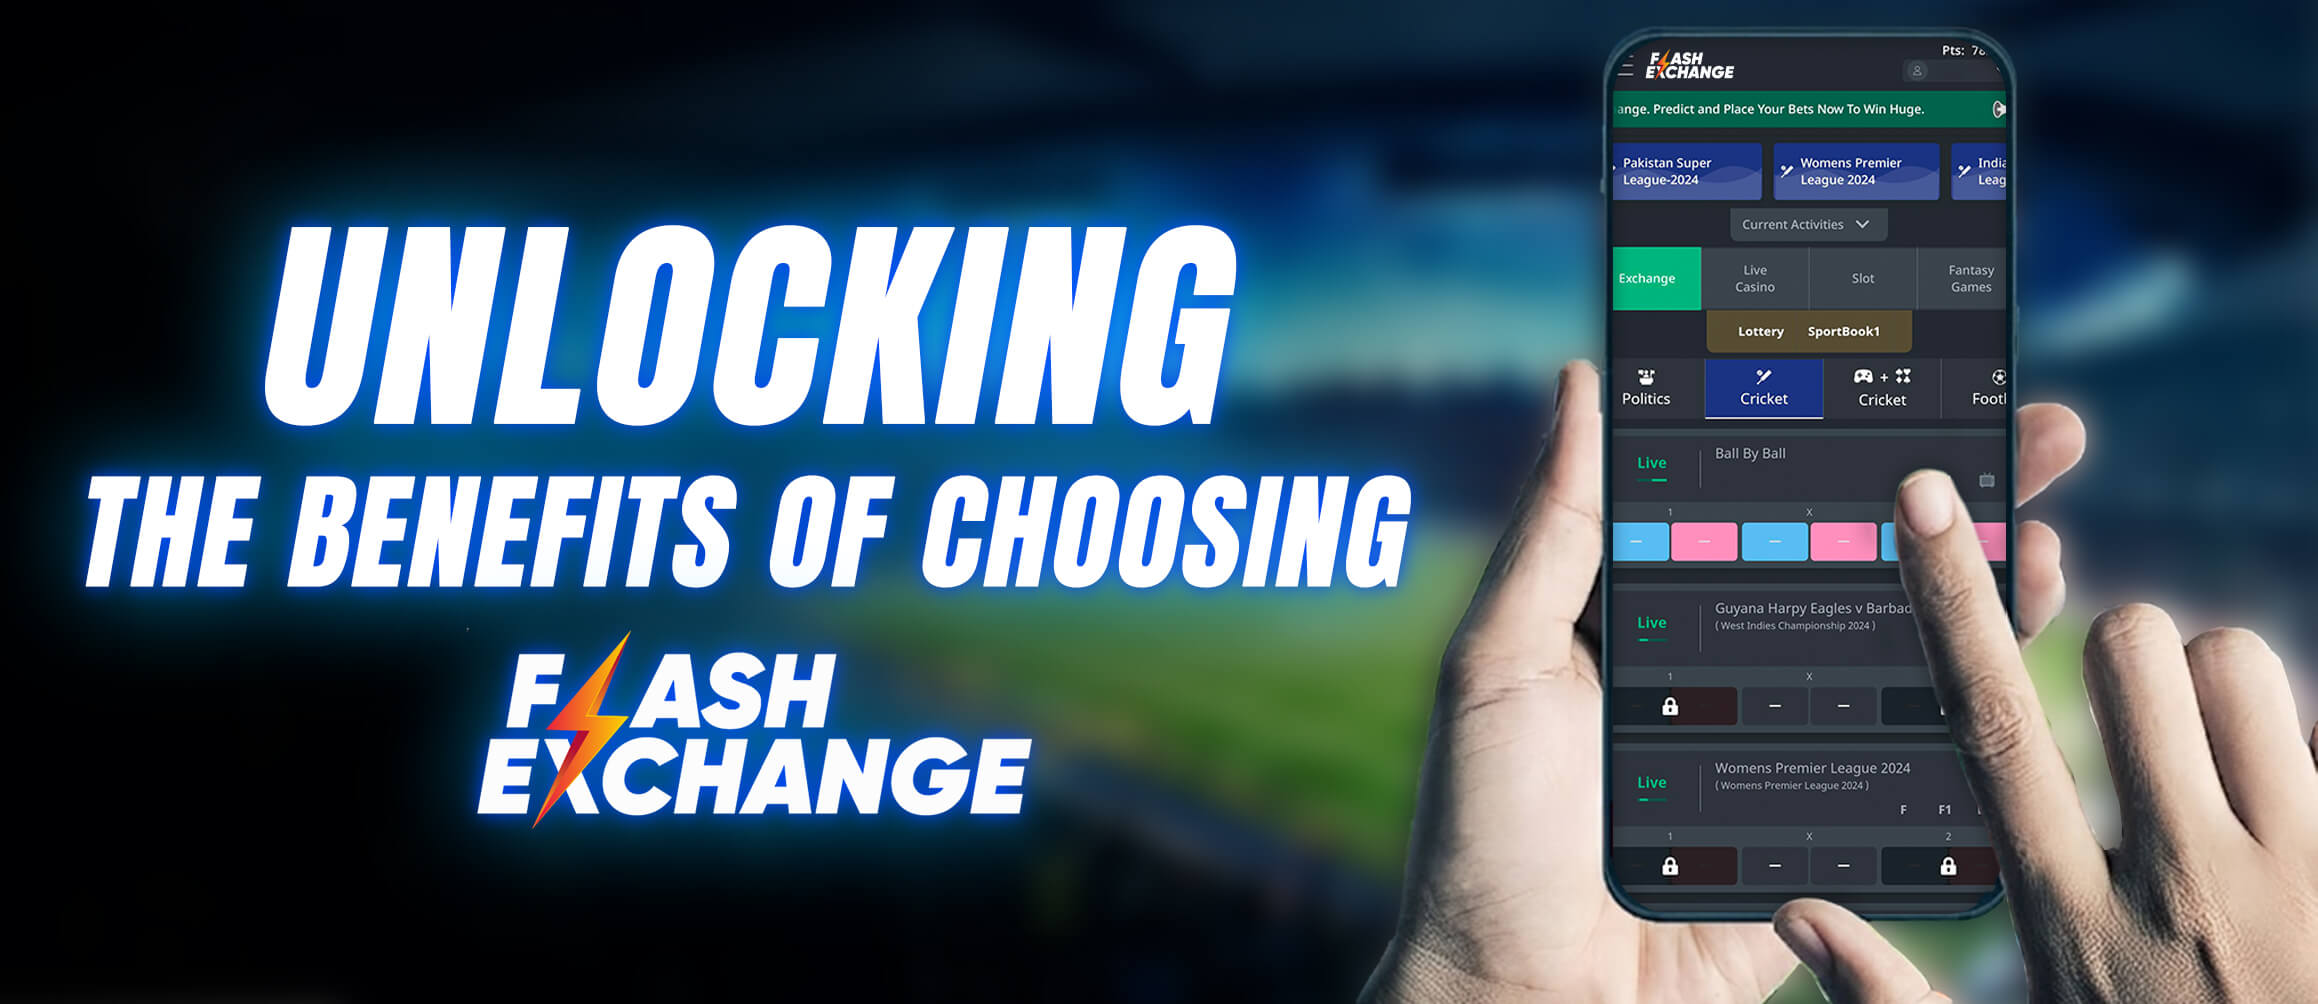 Unlocking the Benefits of Choosing Flash Exchange